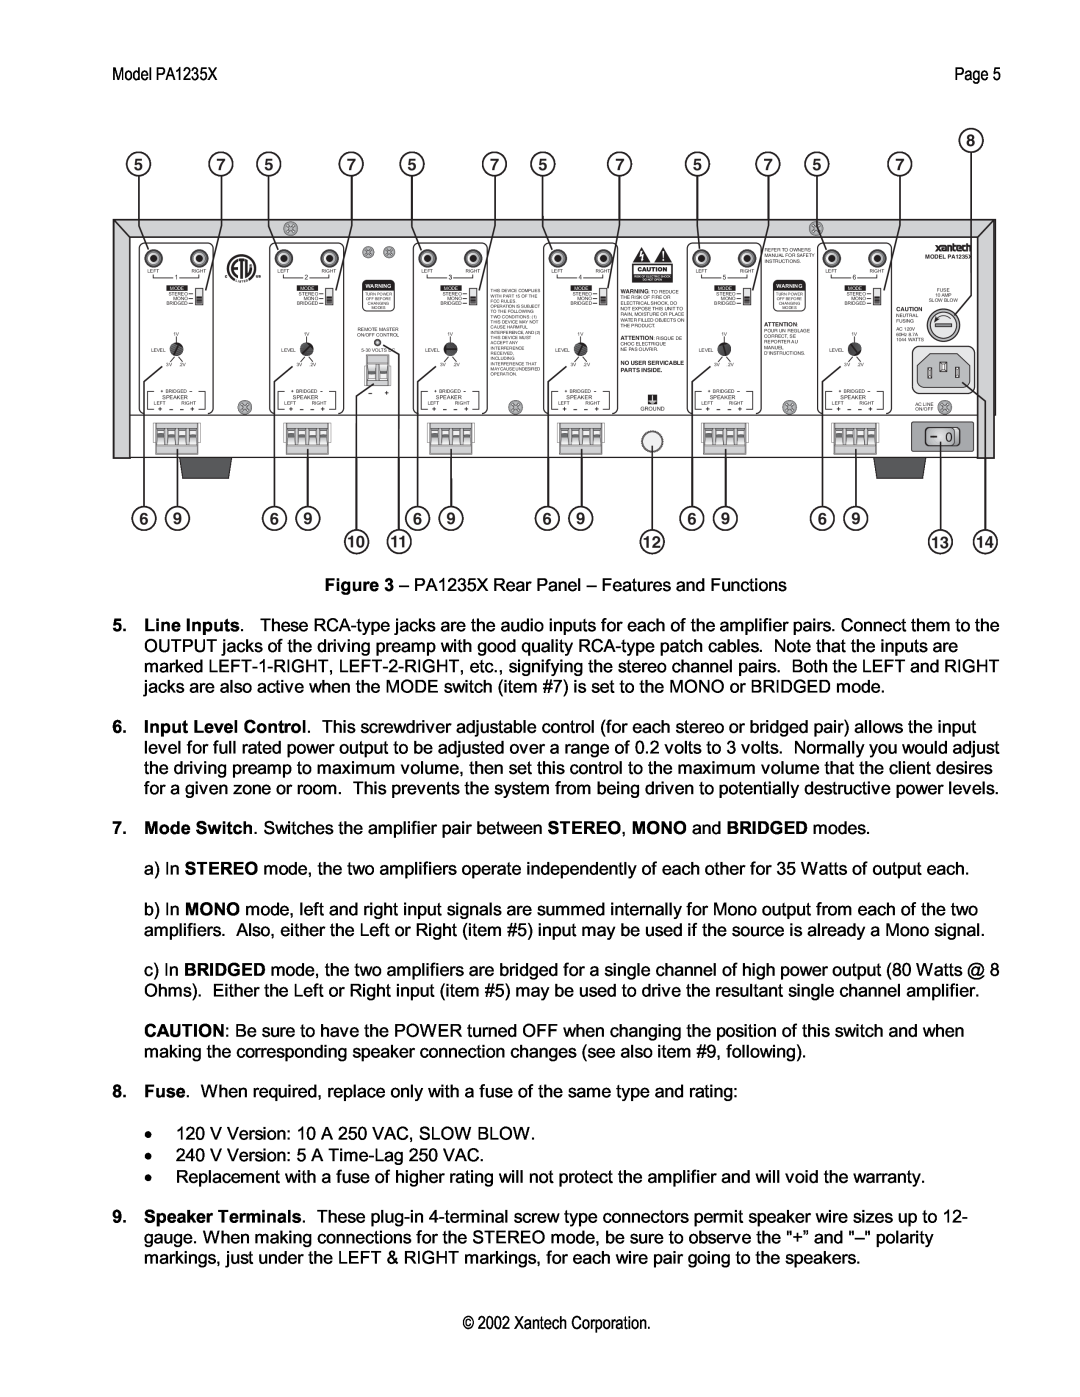 Xantech installation instructions Model PA1235X, Page 